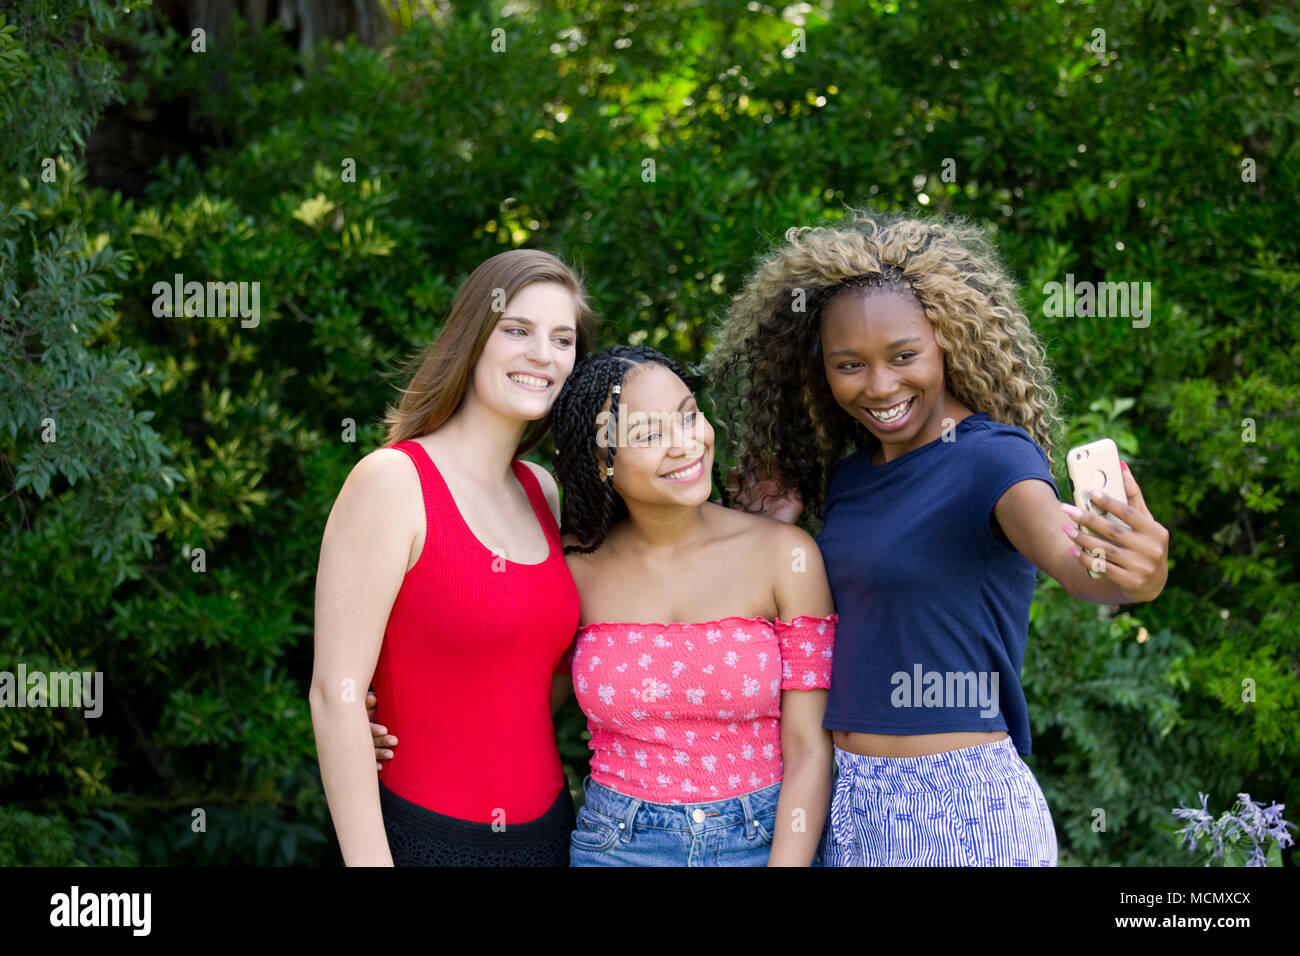 Three women taking a selfie in a park Stock Photo